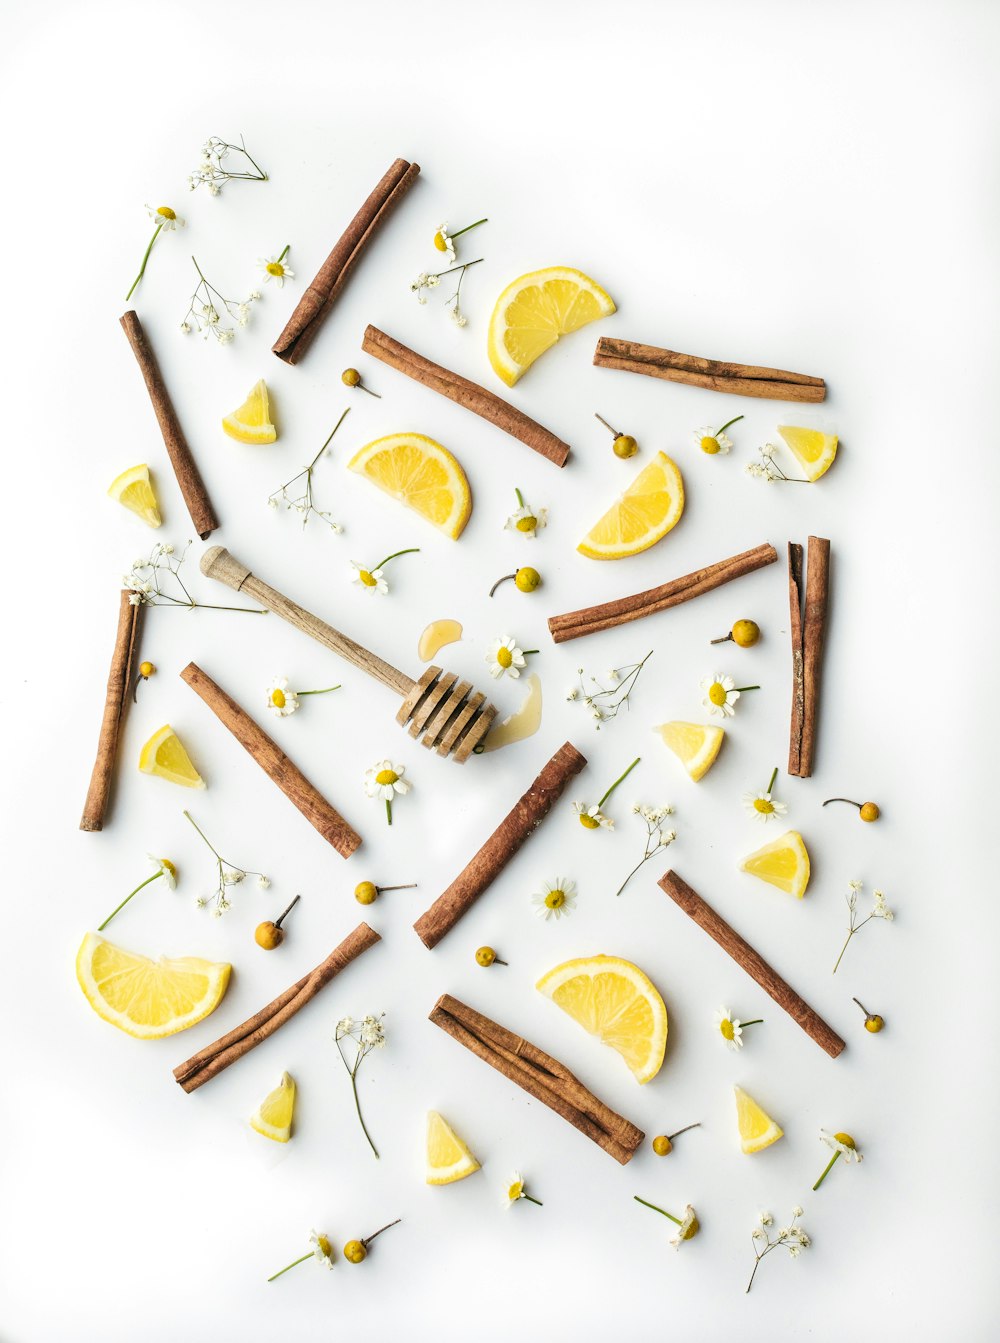 brown sticks and slices of lemons